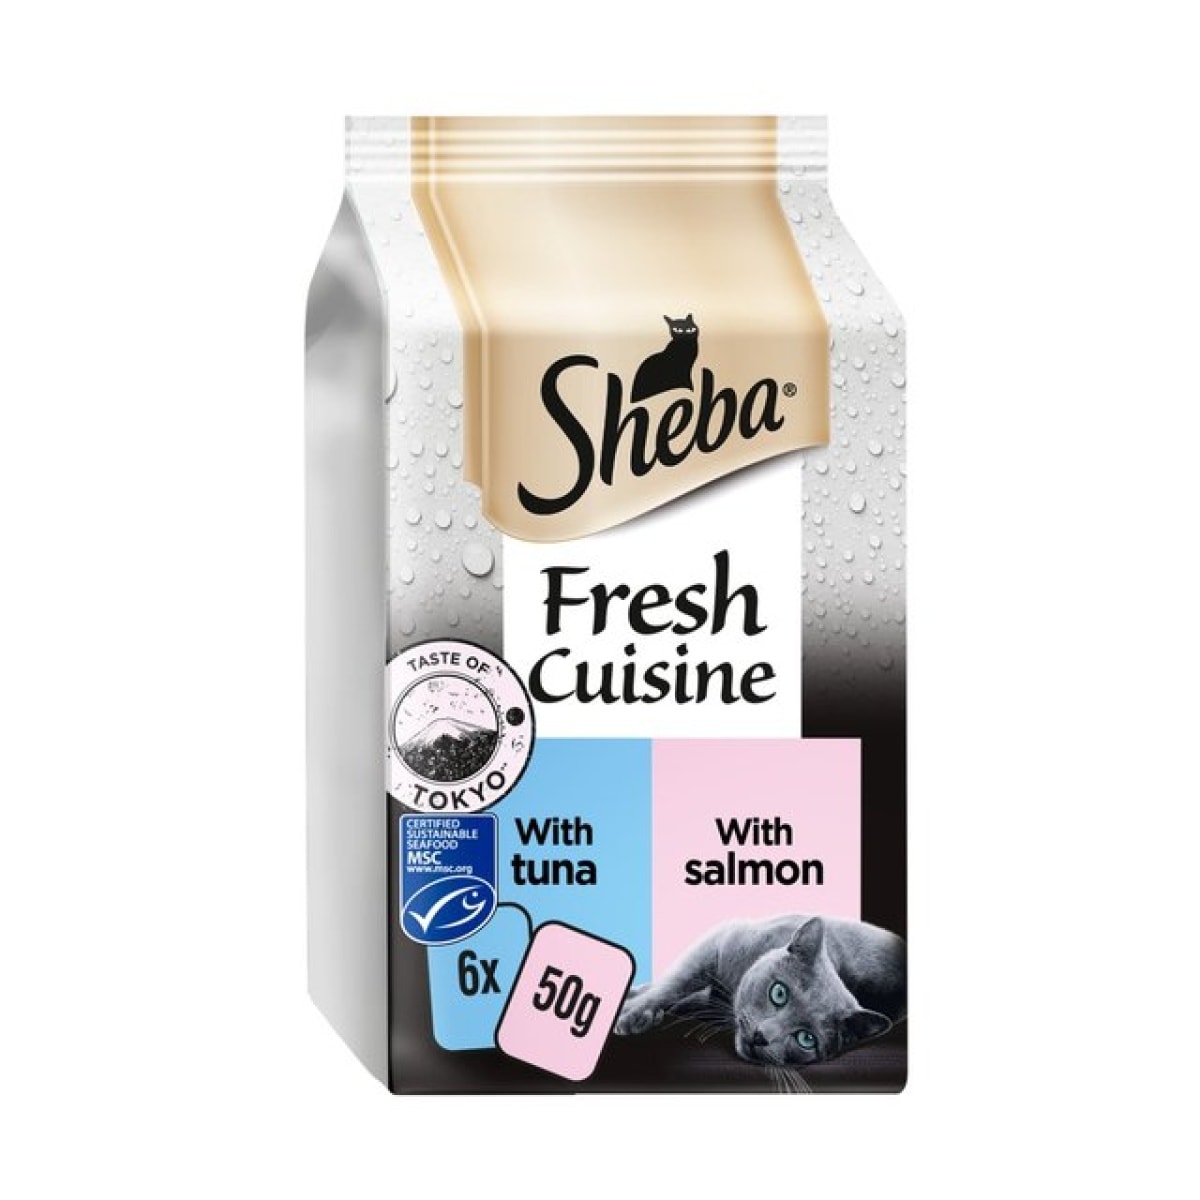 Sheba Fresh Cuisine in Gravy with Salmon & with Tuna 6 x 50g Main Image